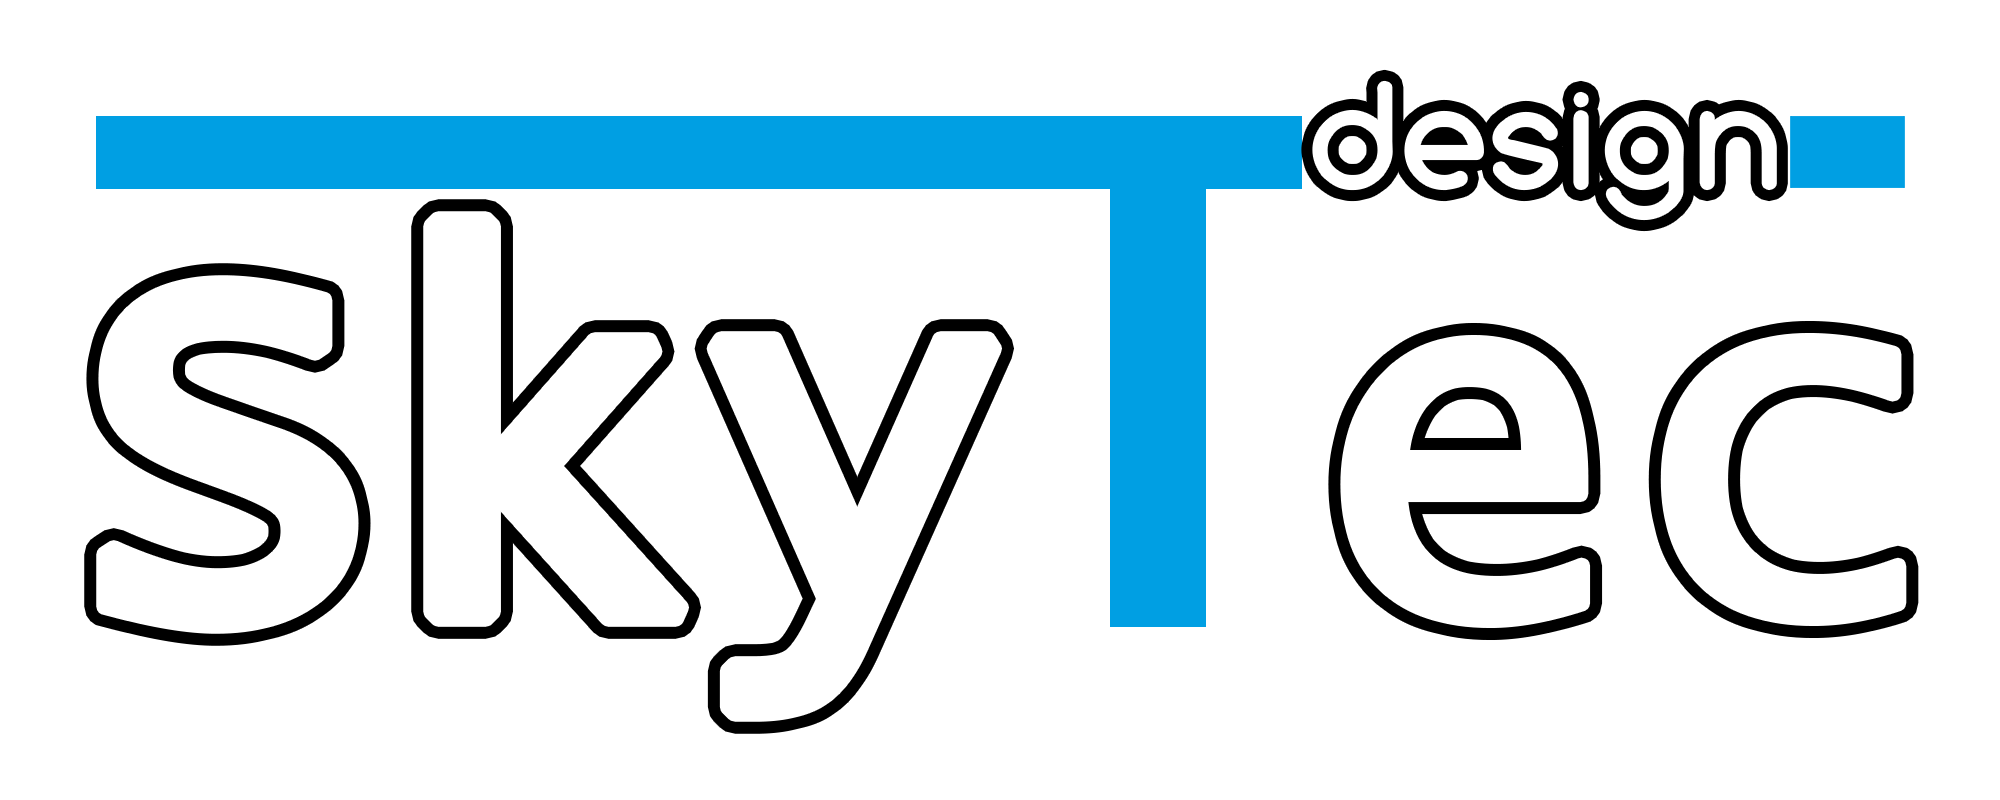 SkyTec-design